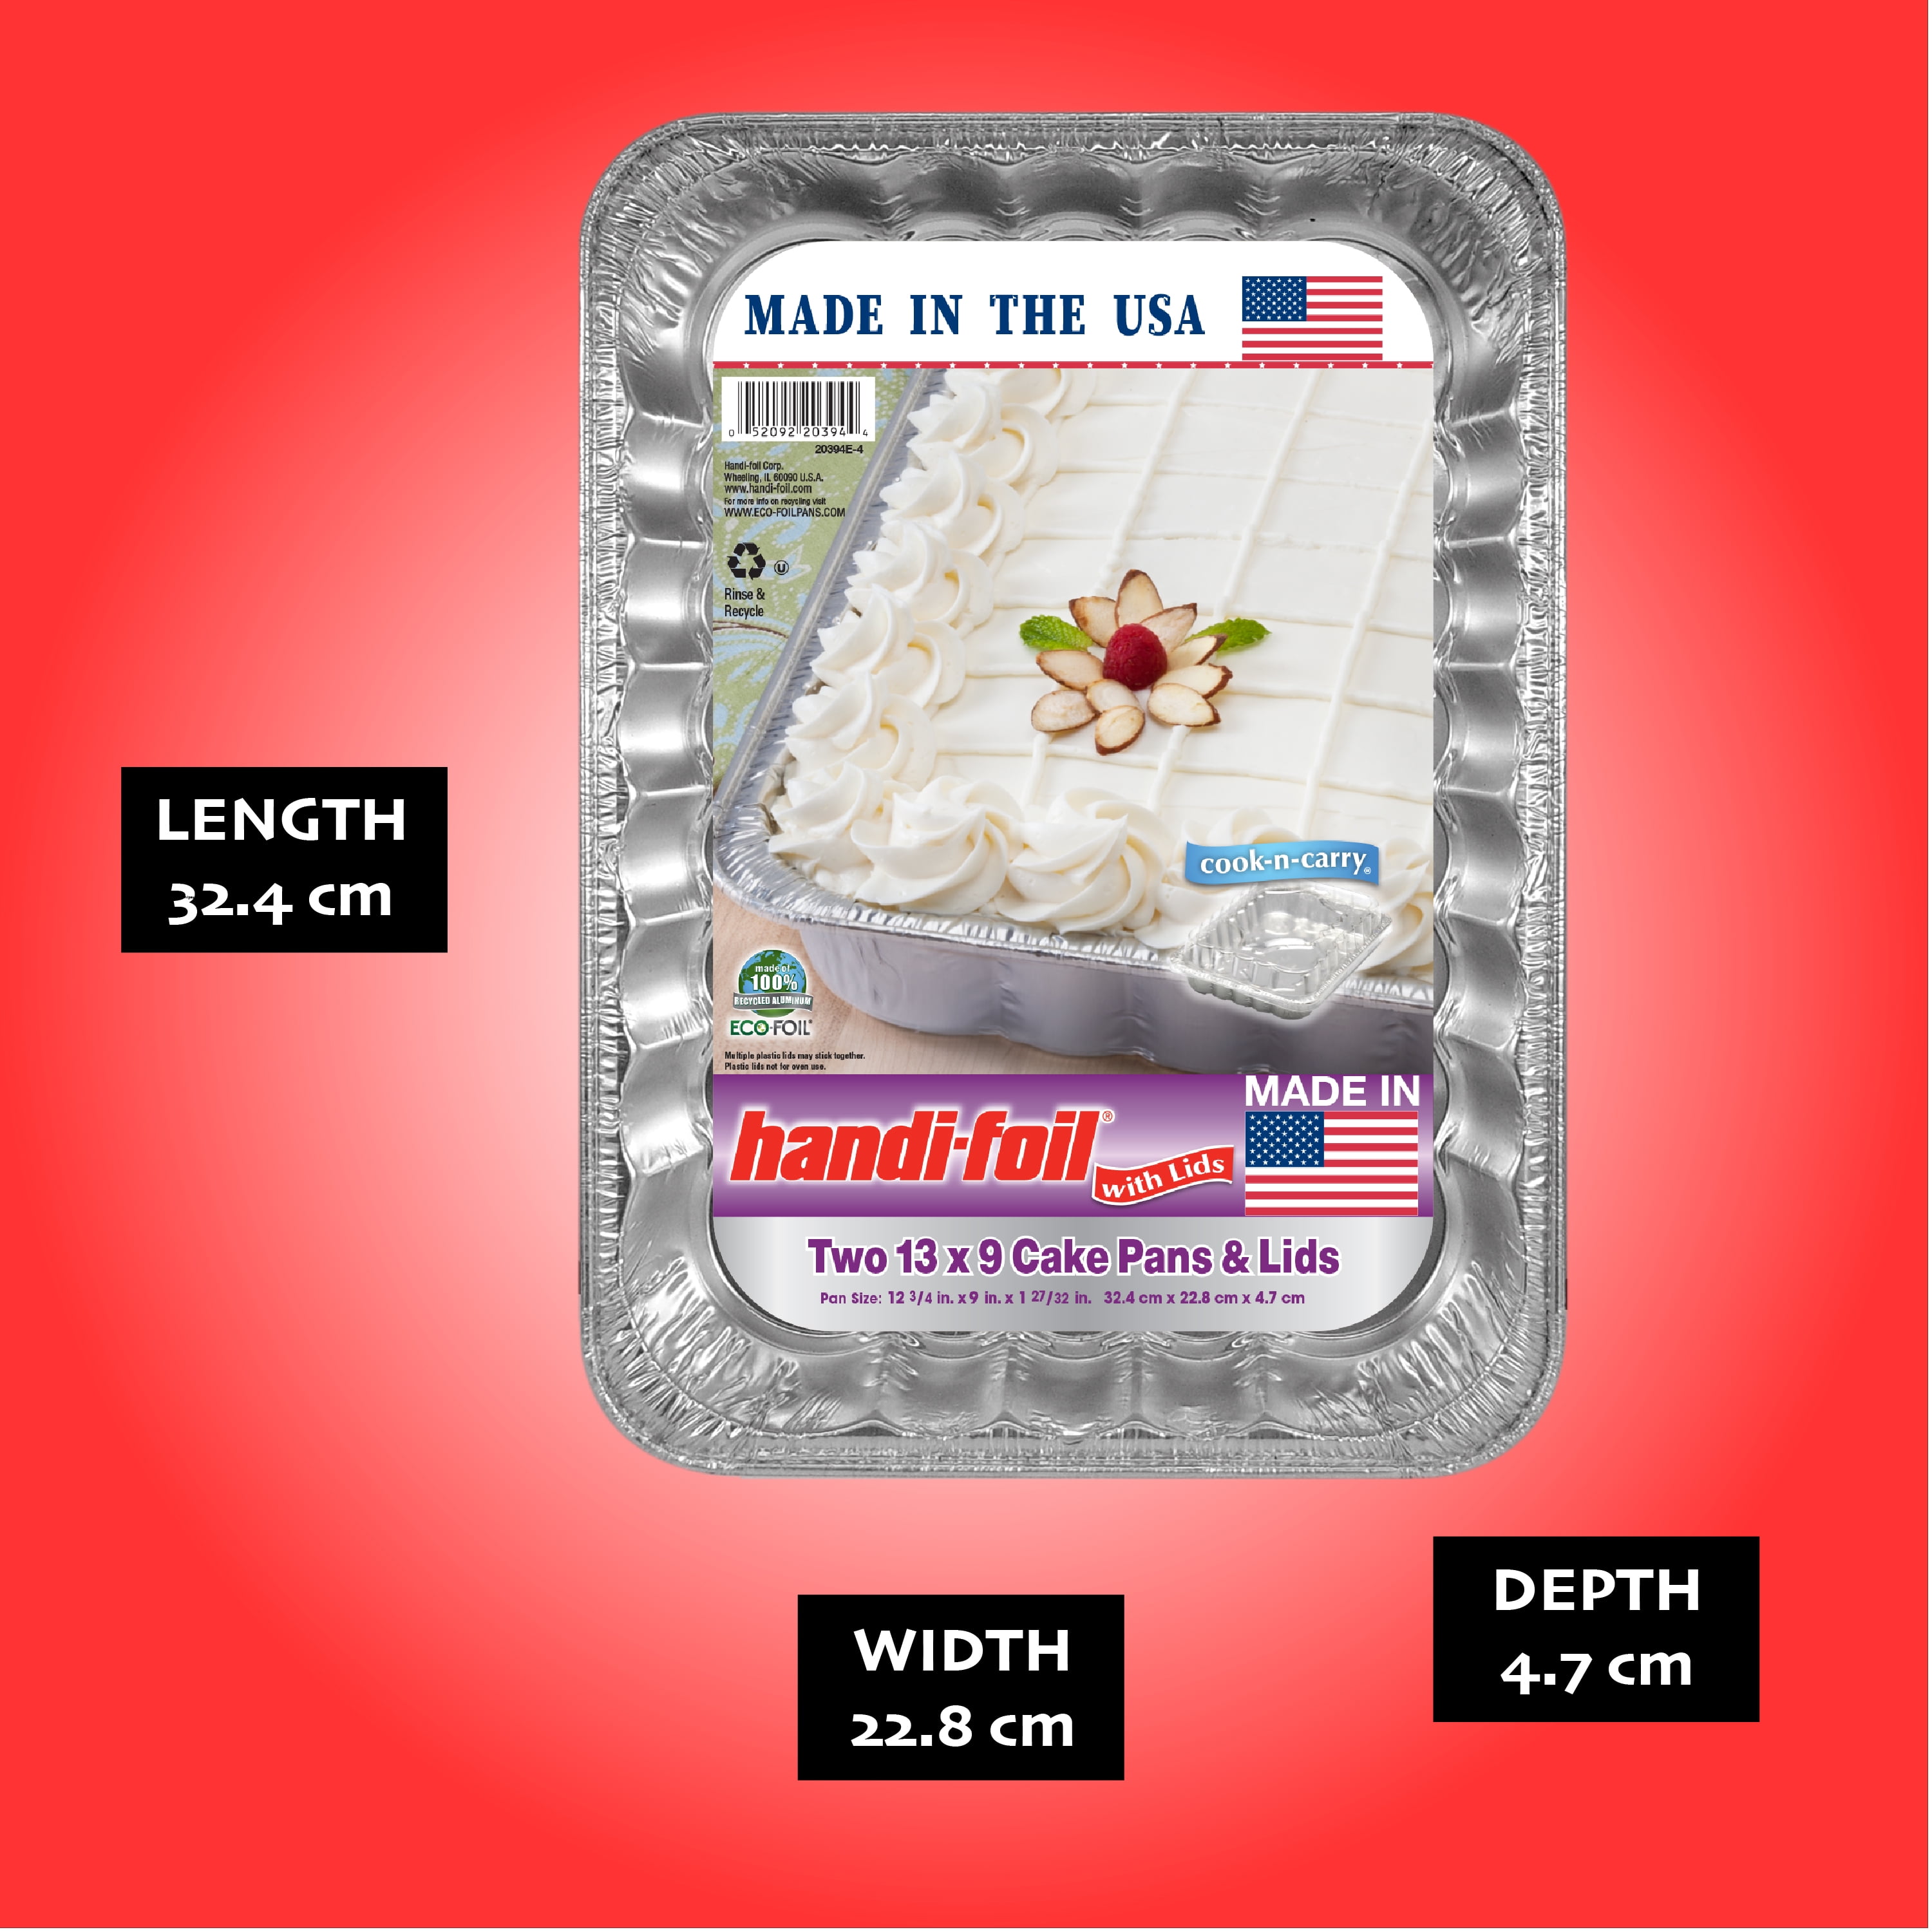 Handi-Foil Eco-Foil Cook-n-Carry 9 x 13 Pink Fun Colors Pan w/ Lid